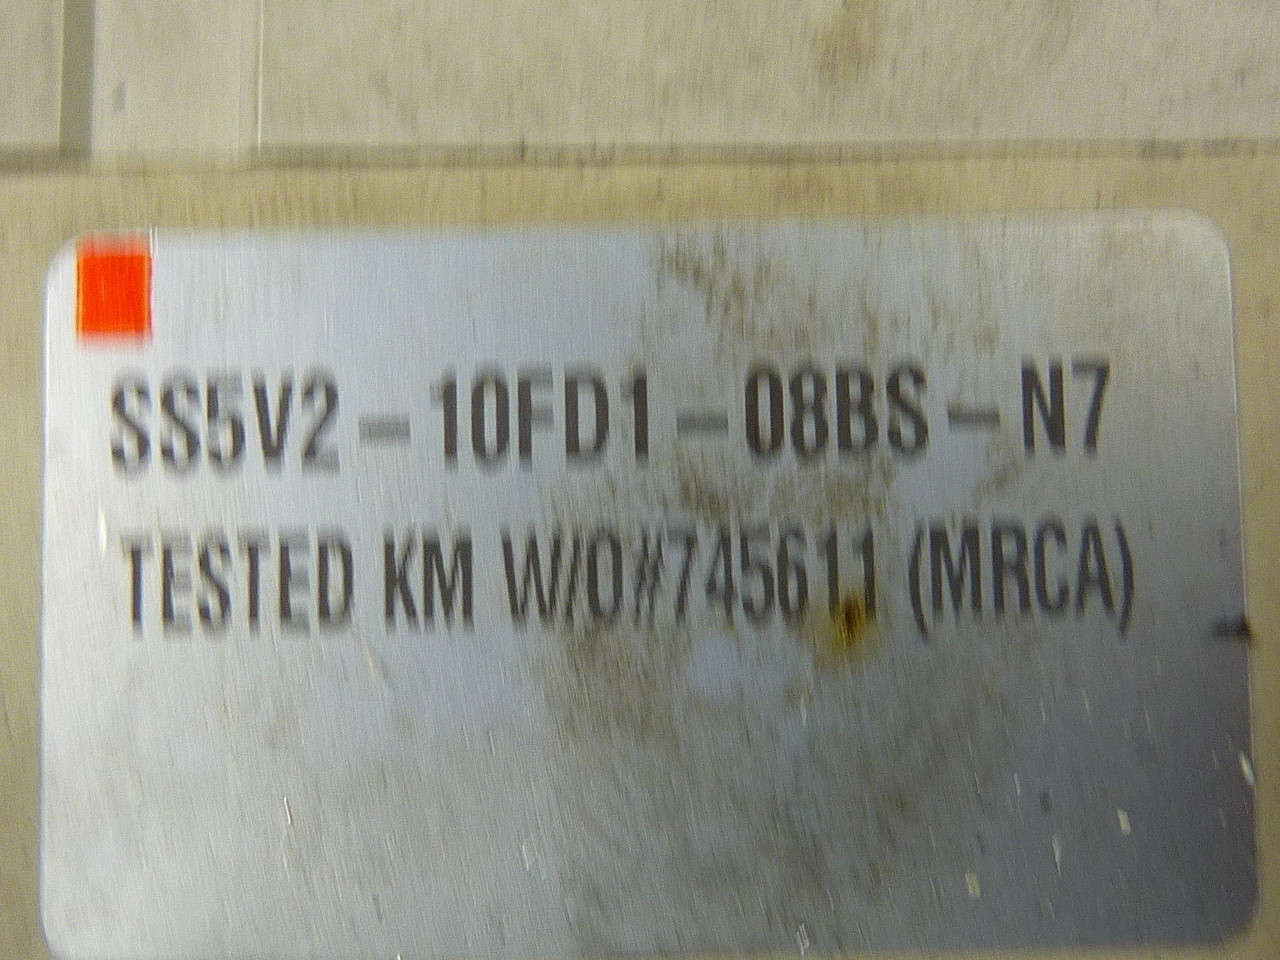 SMC SS5V2-10FD1-08BS-N7 Pneumatic Plug-In Manifold USED